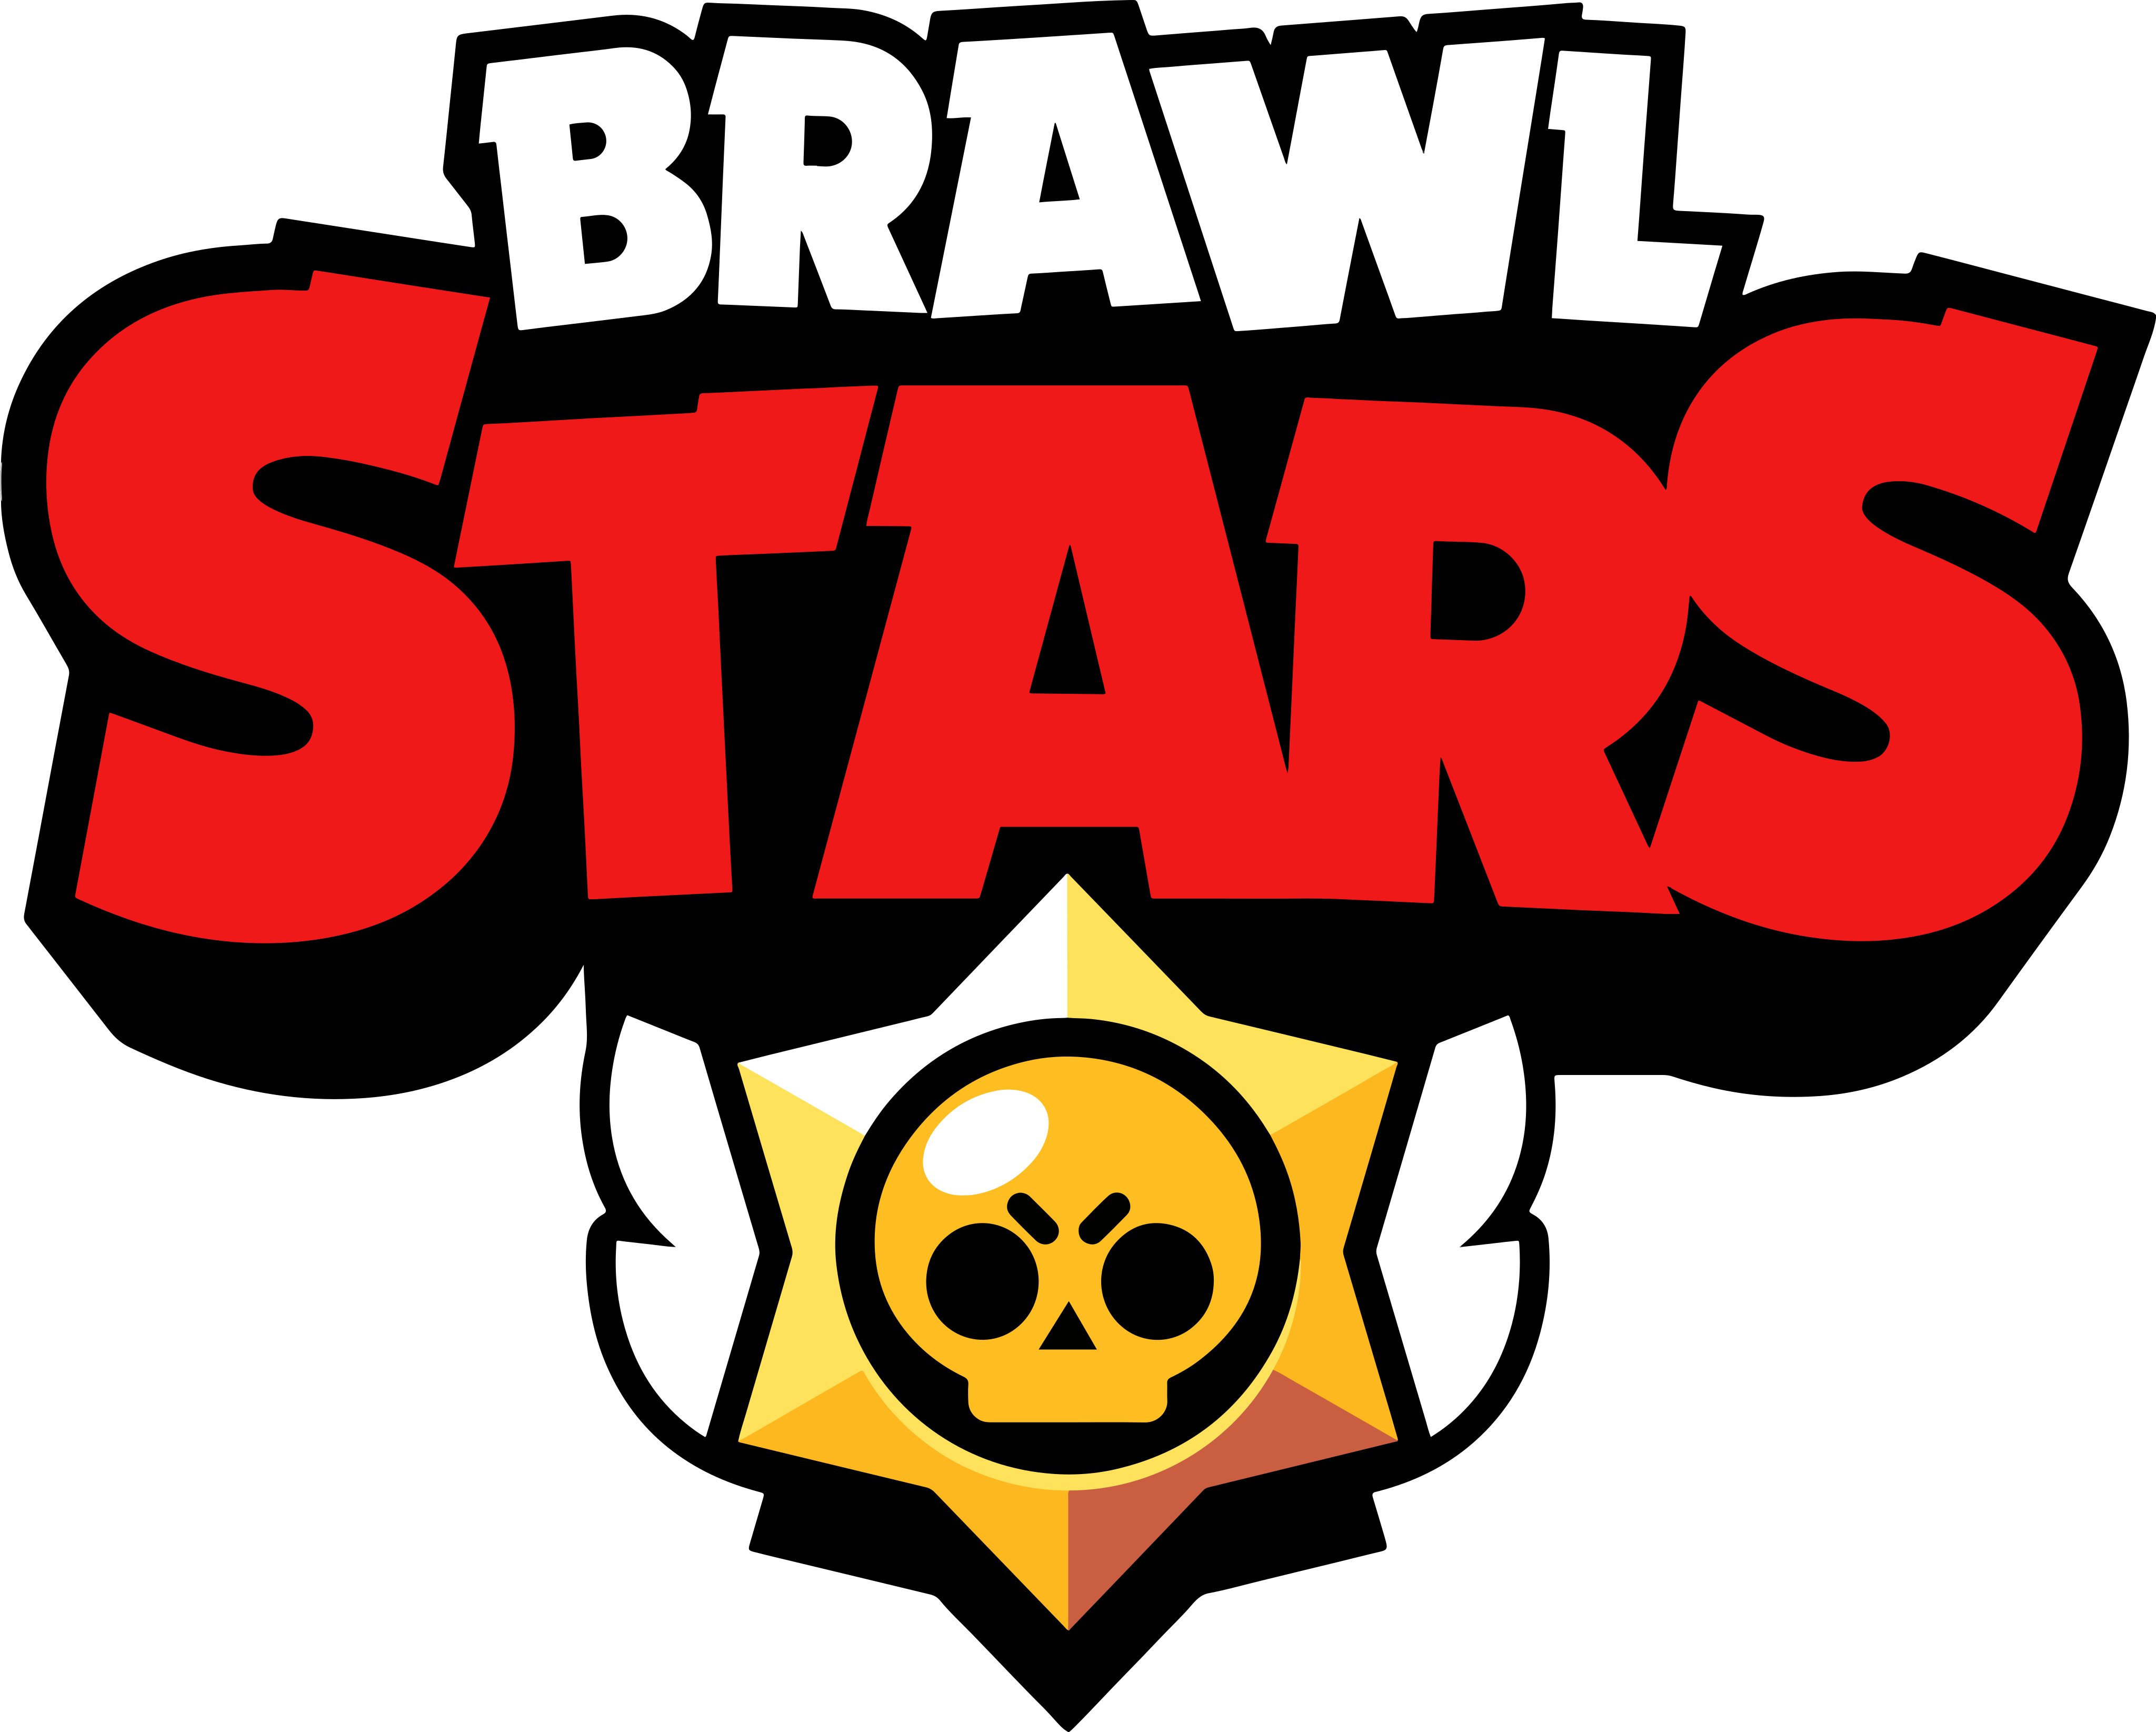 brawl stars logo - Brawl Stars Logo